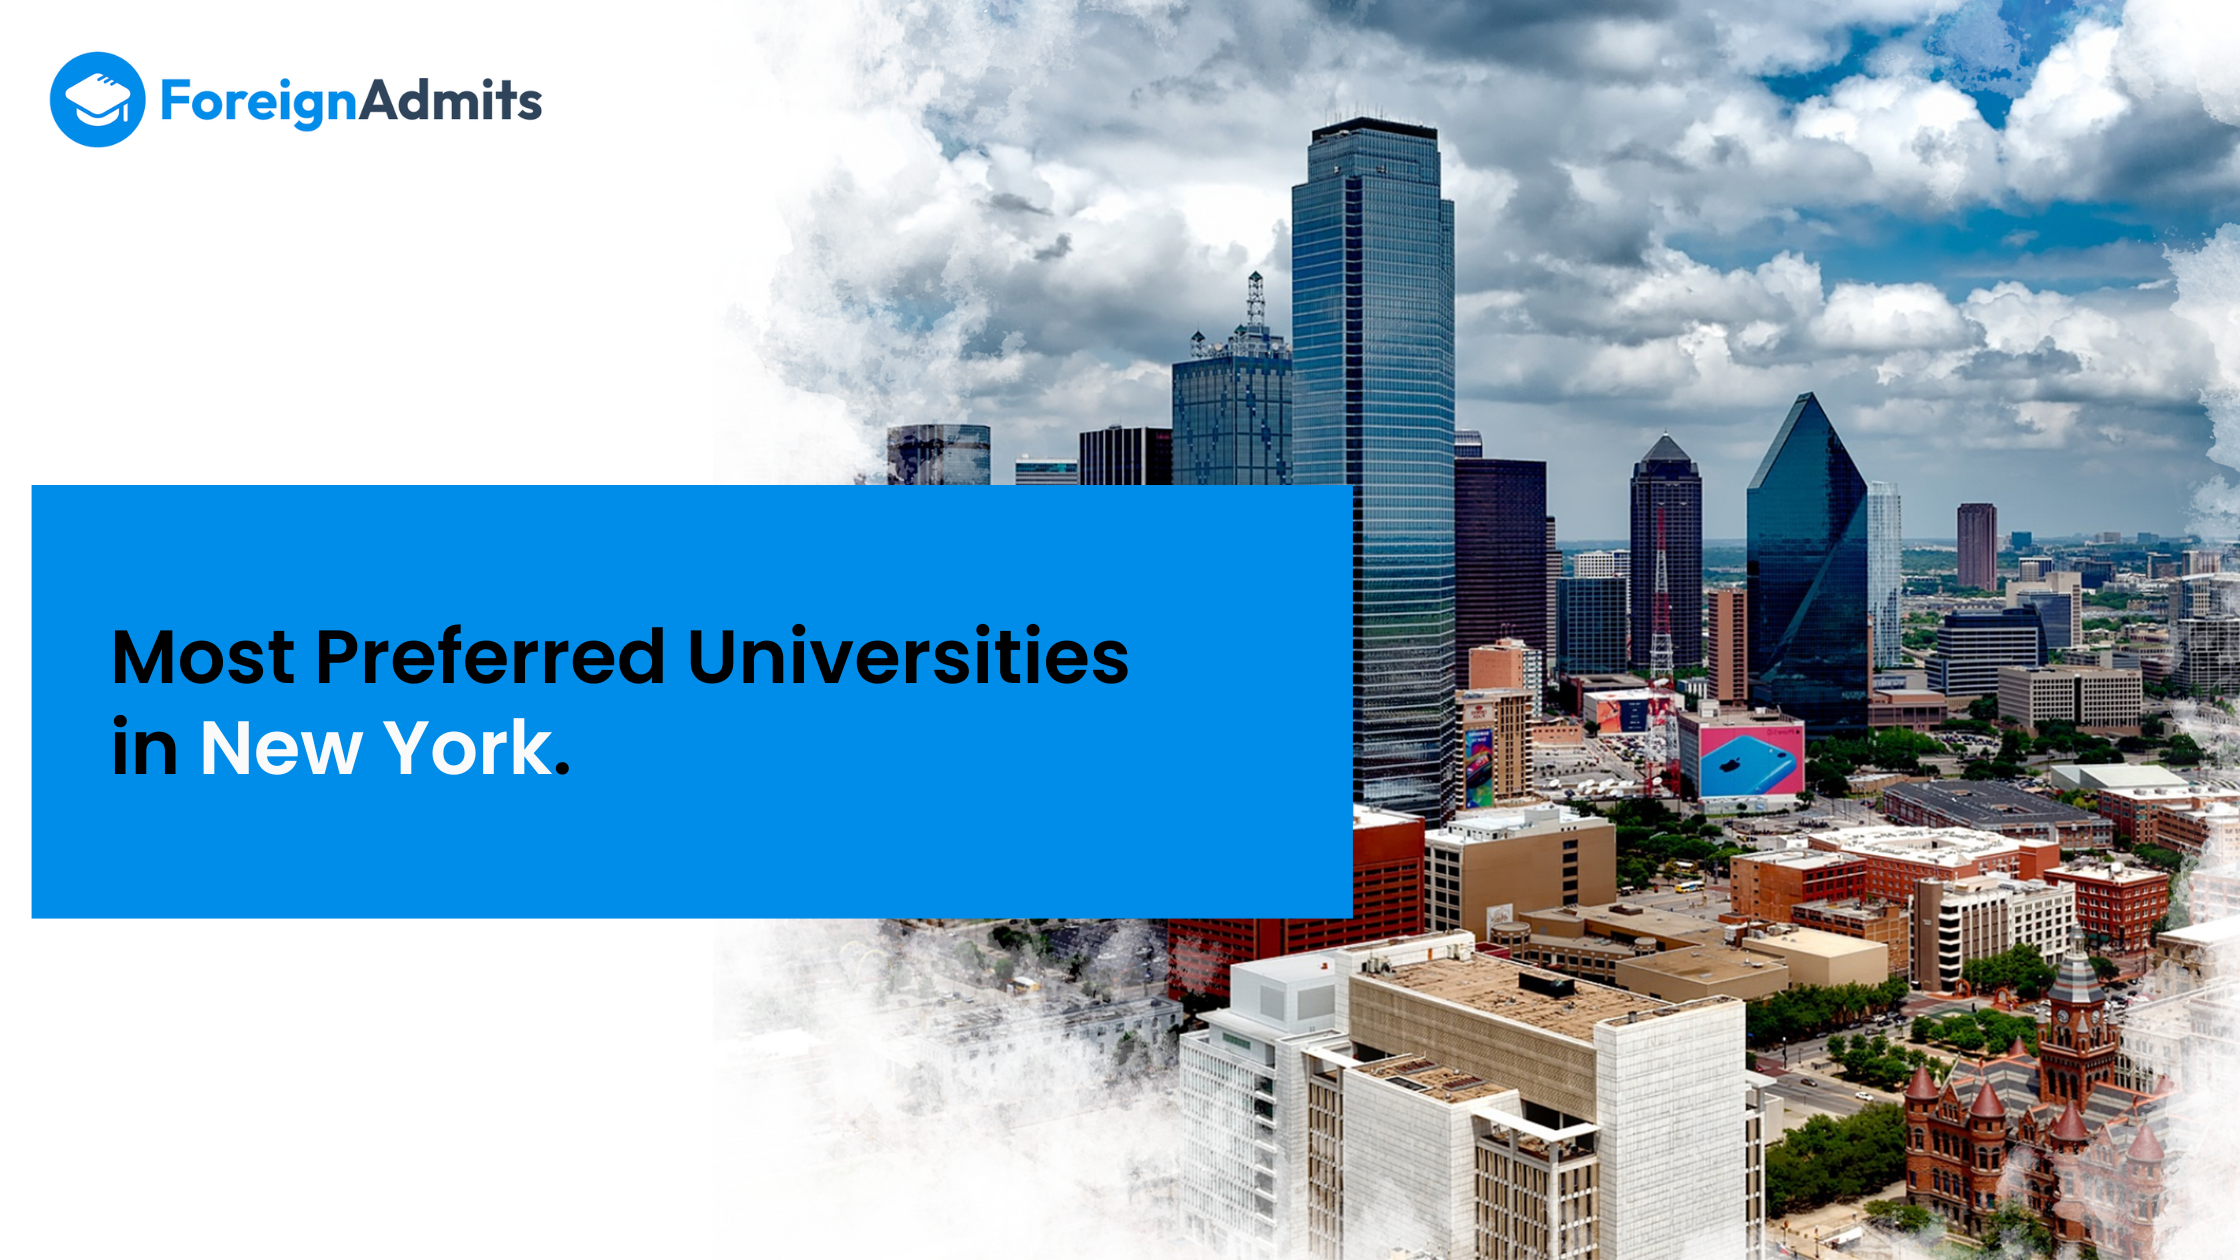 Most Preferred Universities in New York